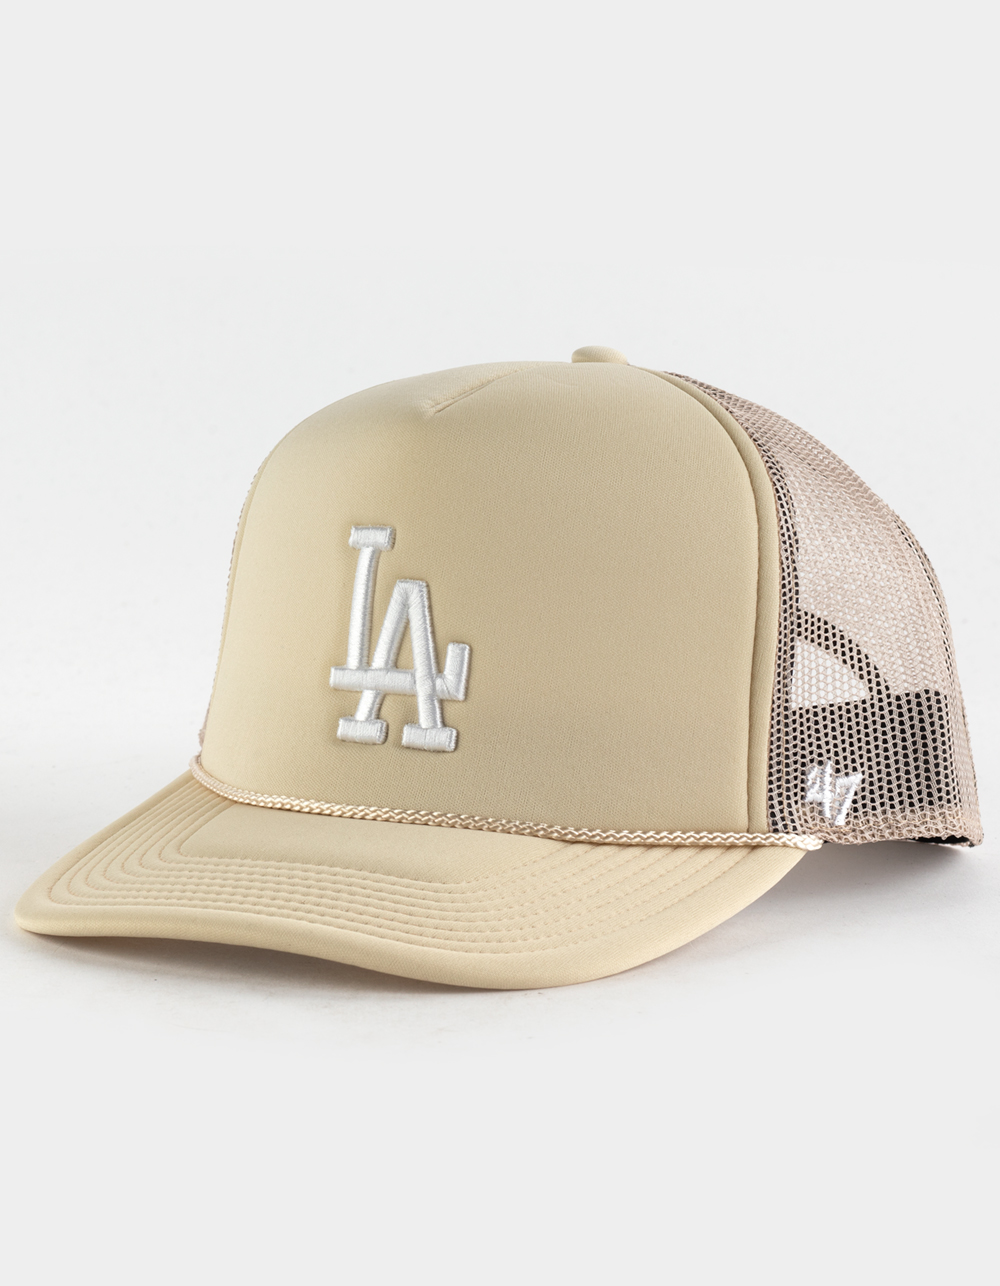 47 BRAND Los Angeles Dodgers '47 Trucker Hat